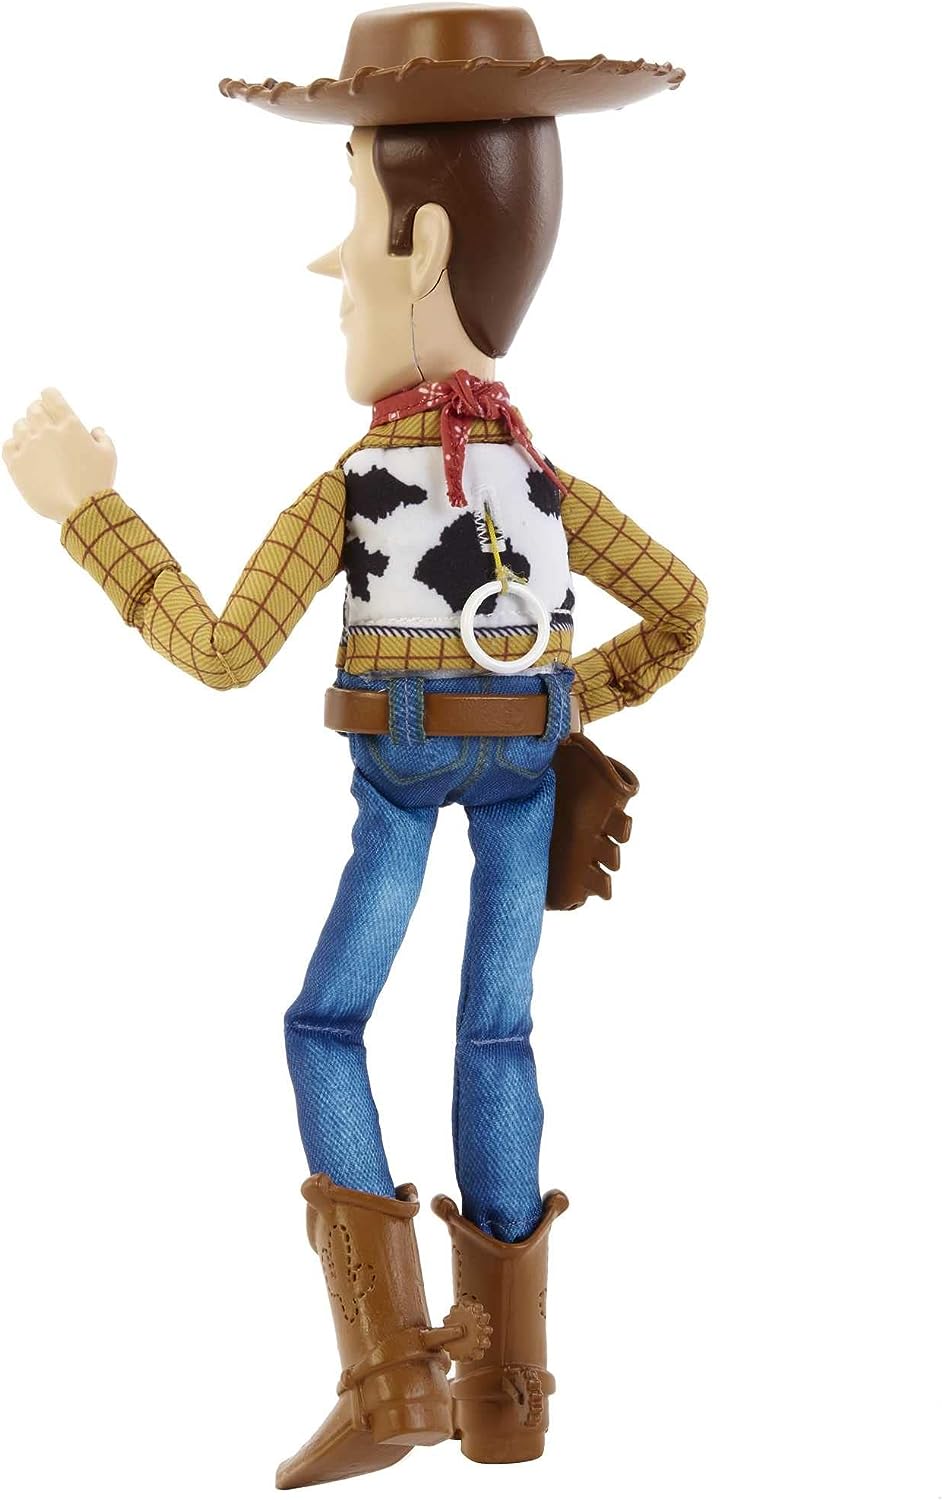 Disney Pixar Toy Story Roundup Fun Woody Large Talking Figure, 12 In Scale, Posa